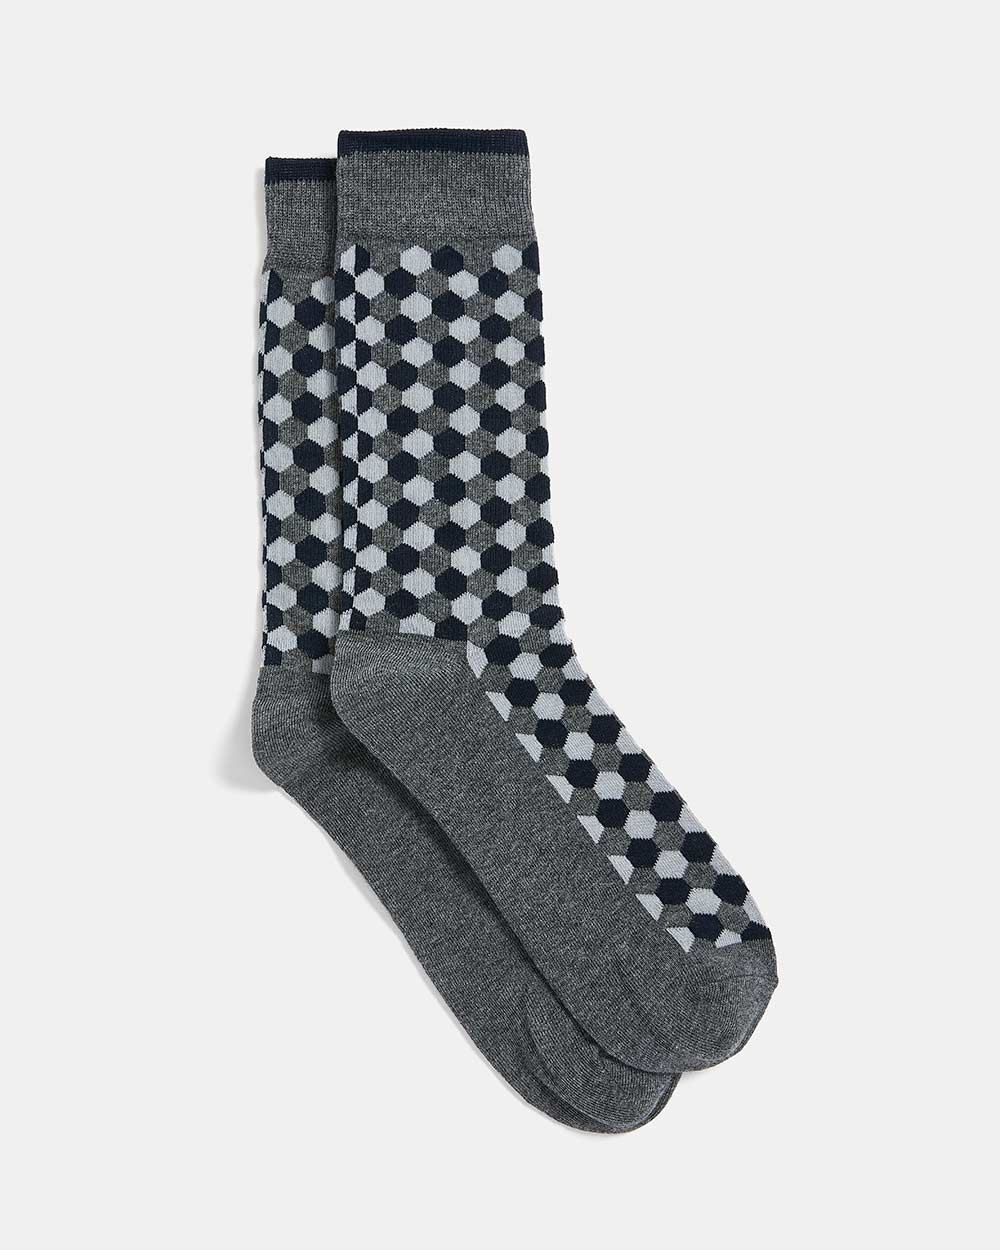 Honeycomb Socks | RW&CO.